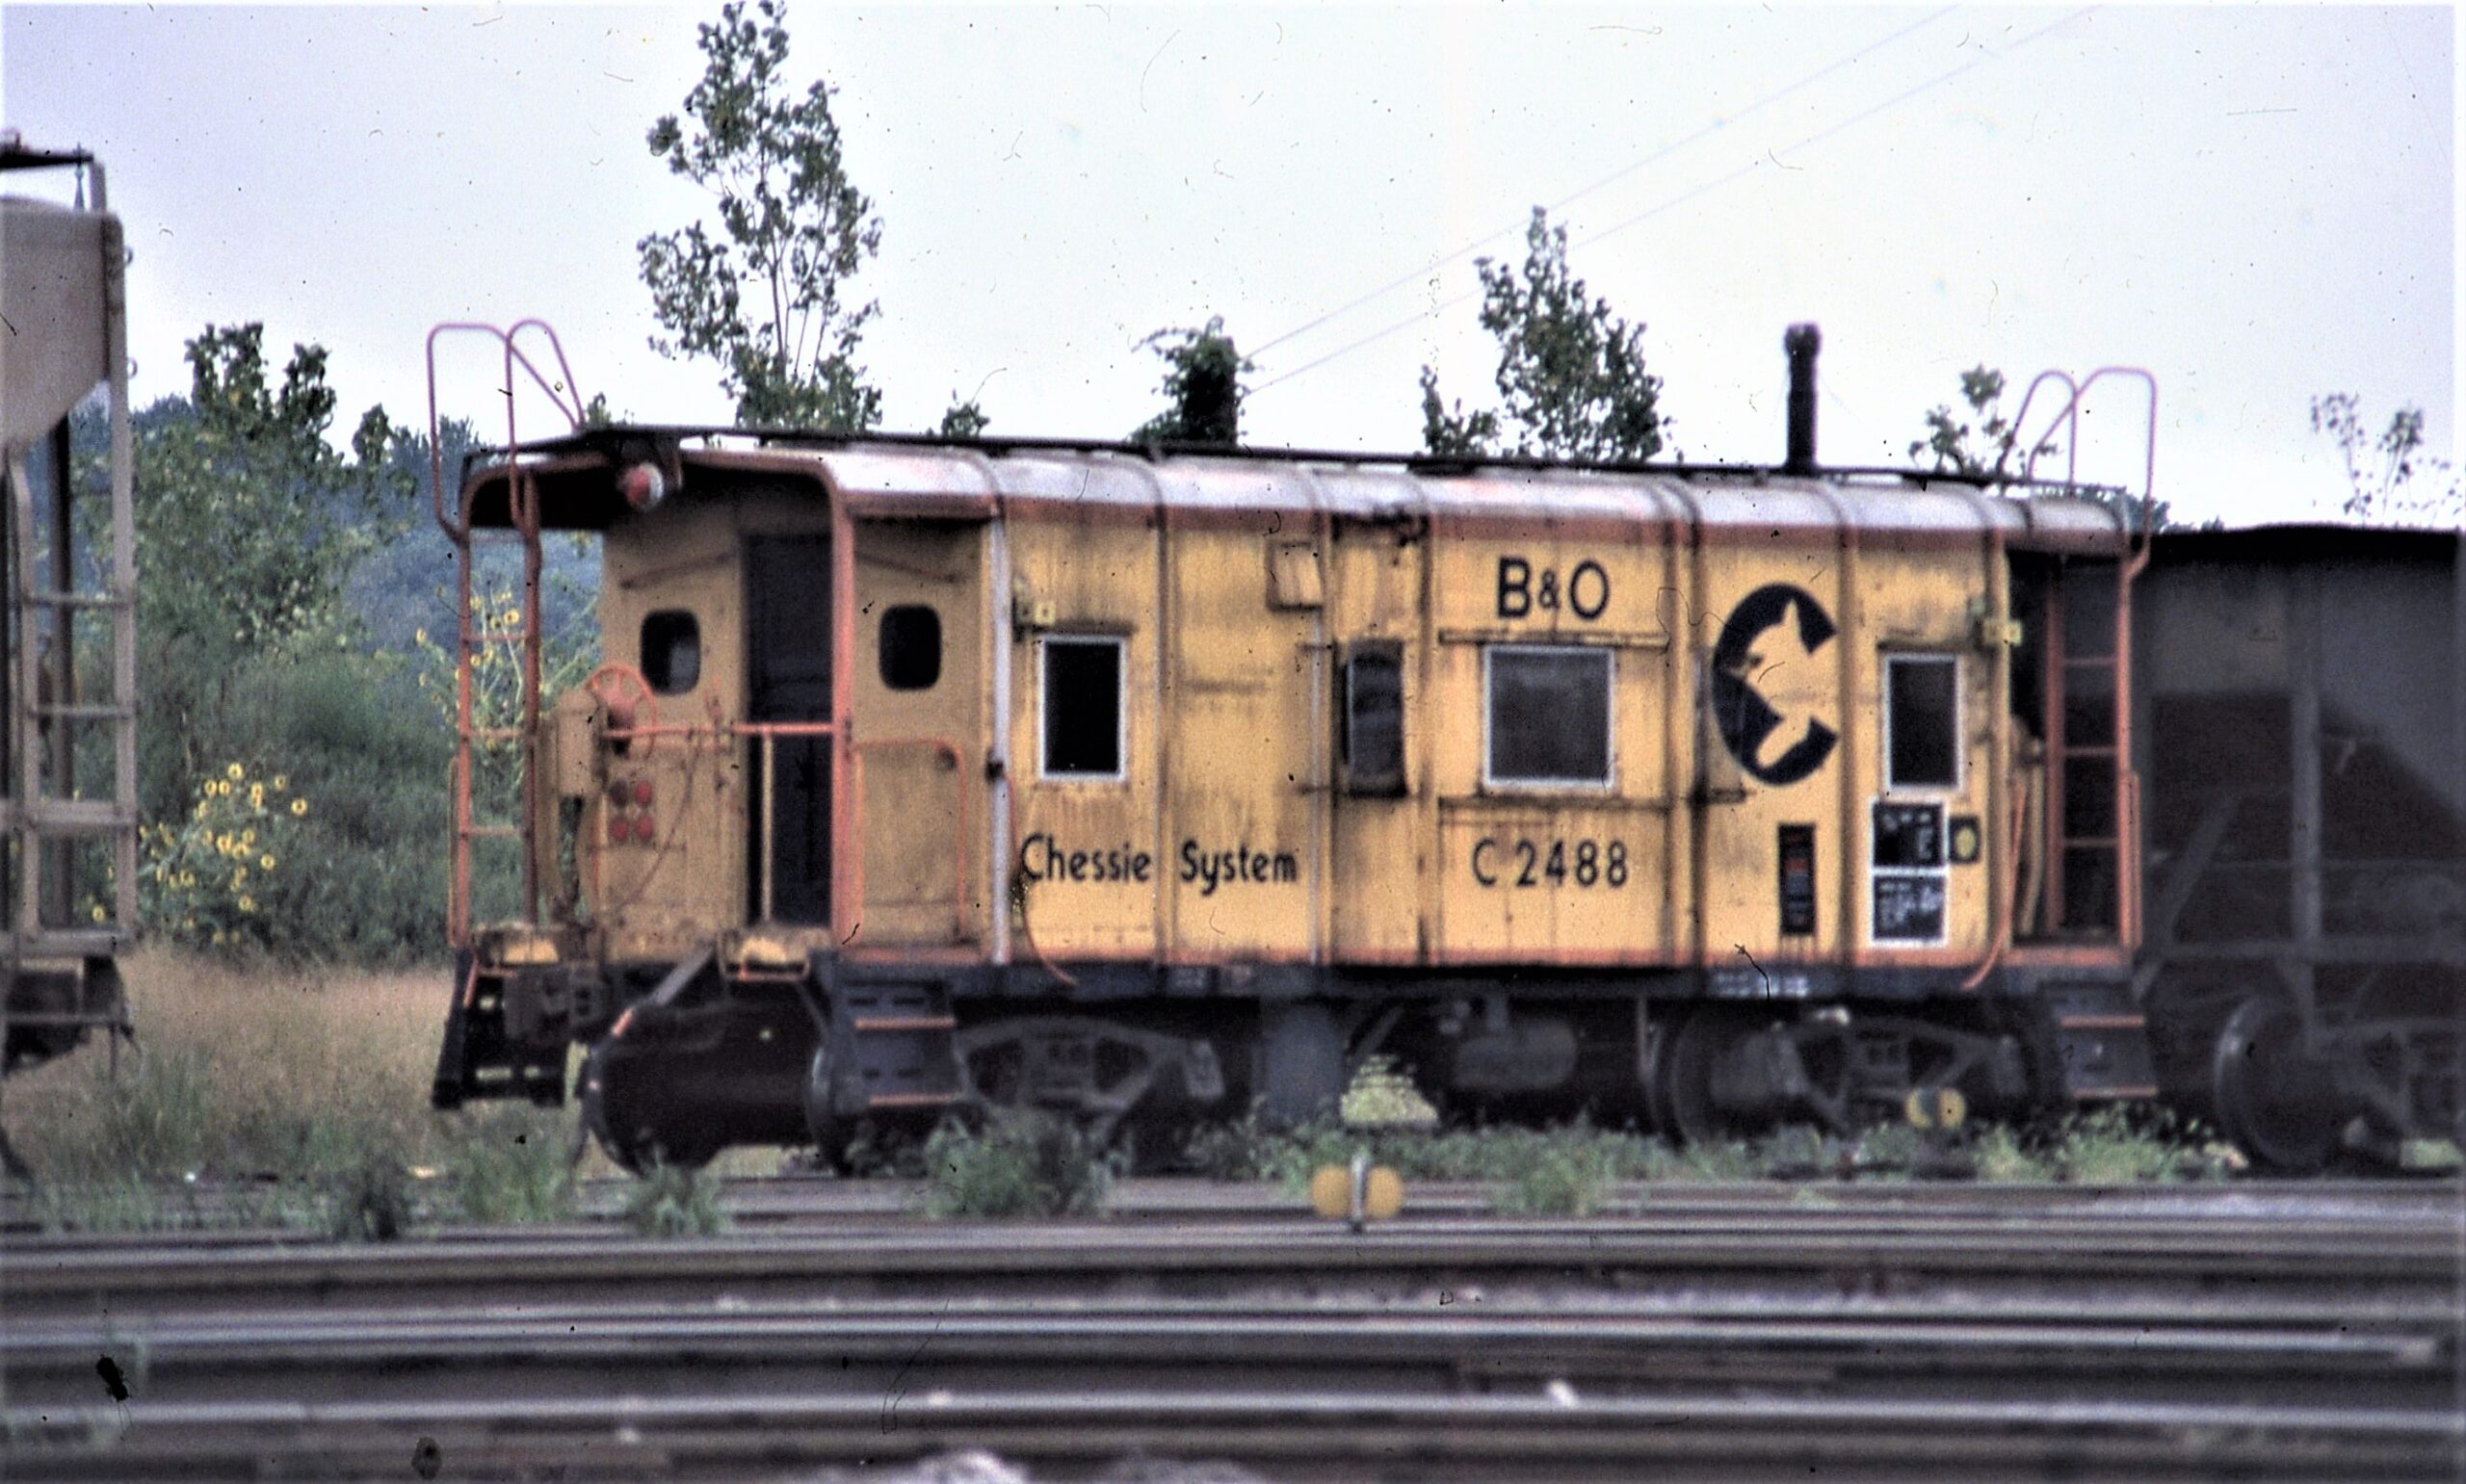 Baltimore and Ohio | Chessie System | Cincinatti, Ohio | I5 class caboose C-2488 | September 1, 1981 | John Wilson photograph